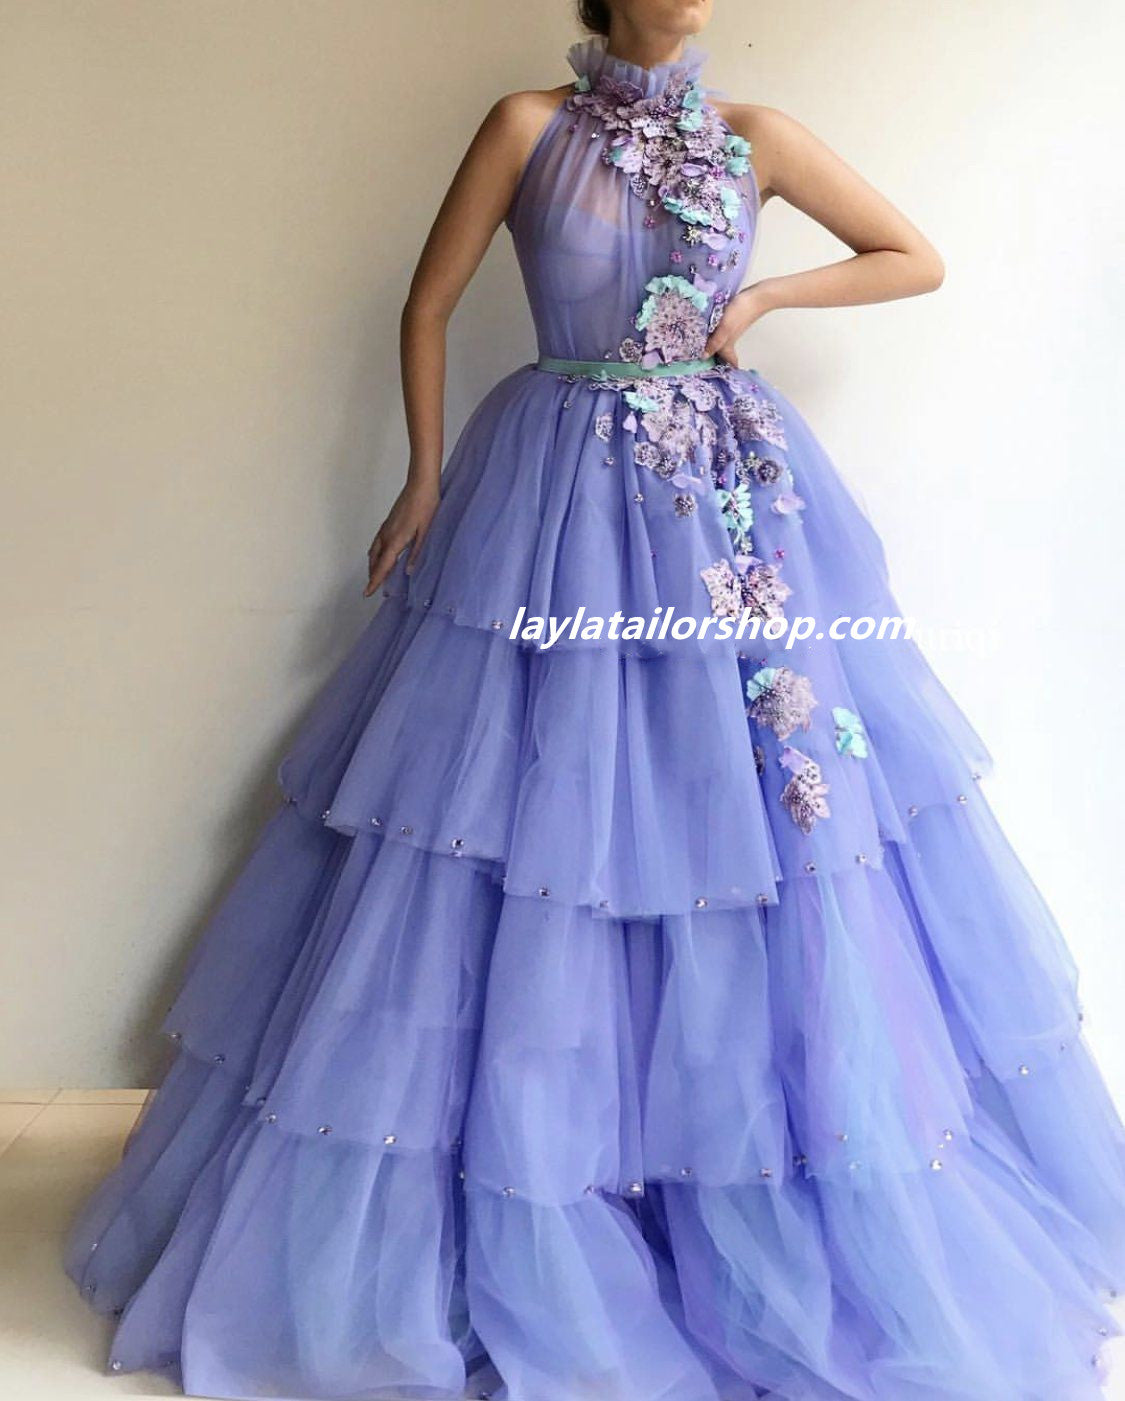 LTP0918,Princess halter ruffles tulle prom dress,purple beaded applique evening formal gown